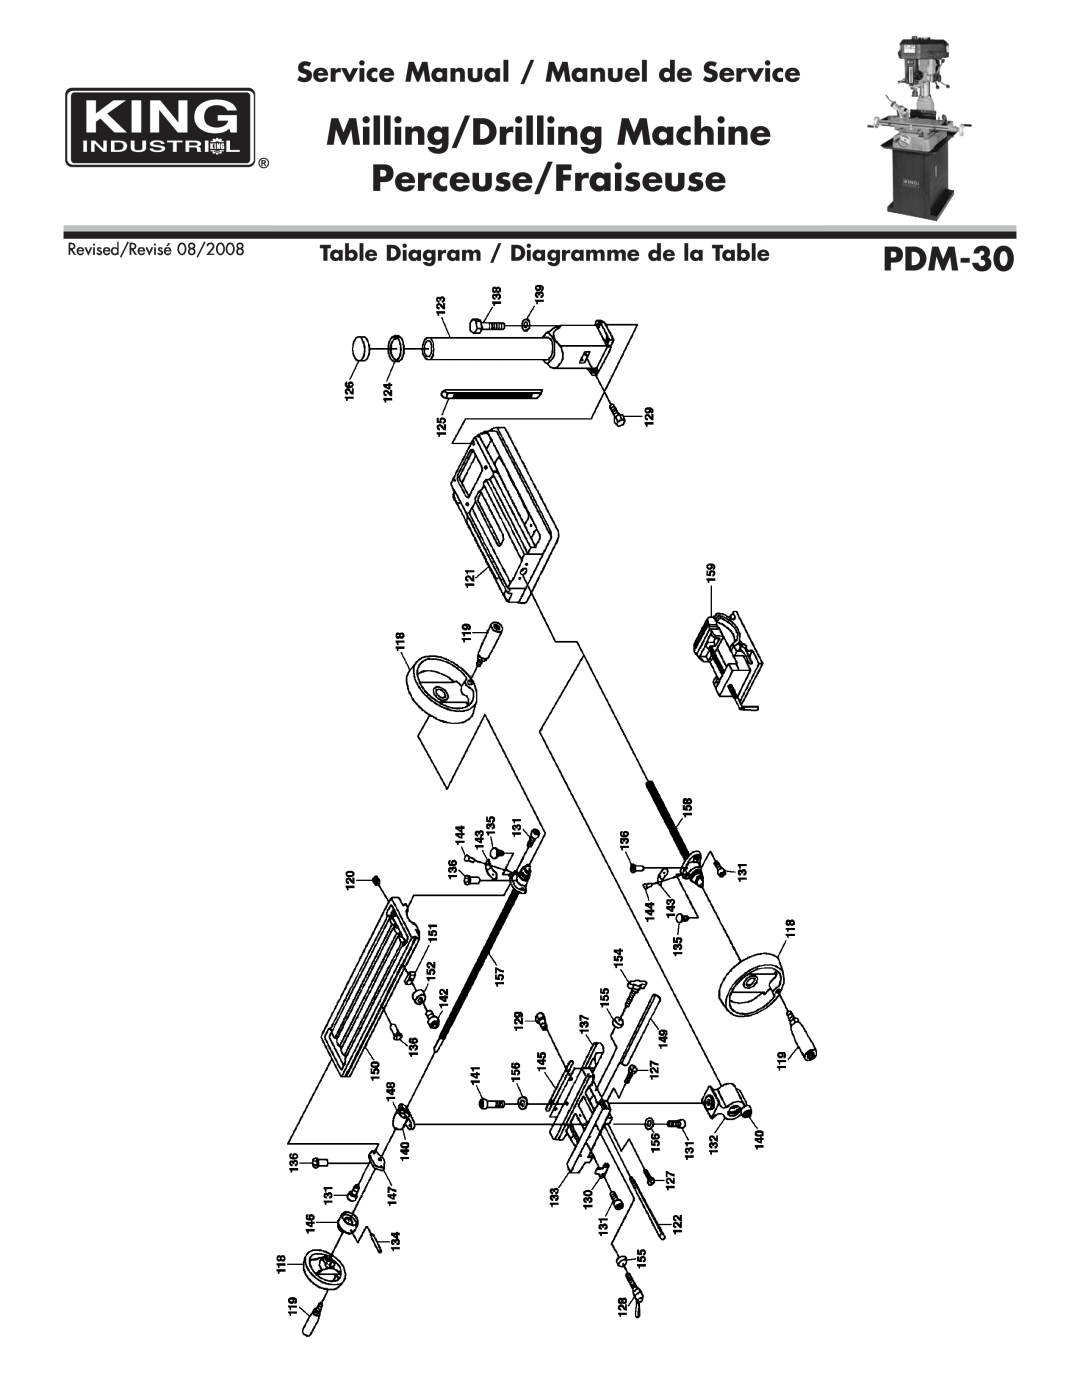 King Canada PDM-30 service manual Table Diagram / Diagramme de la Table, Milling/Drilling Machine Perceuse/Fraiseuse 